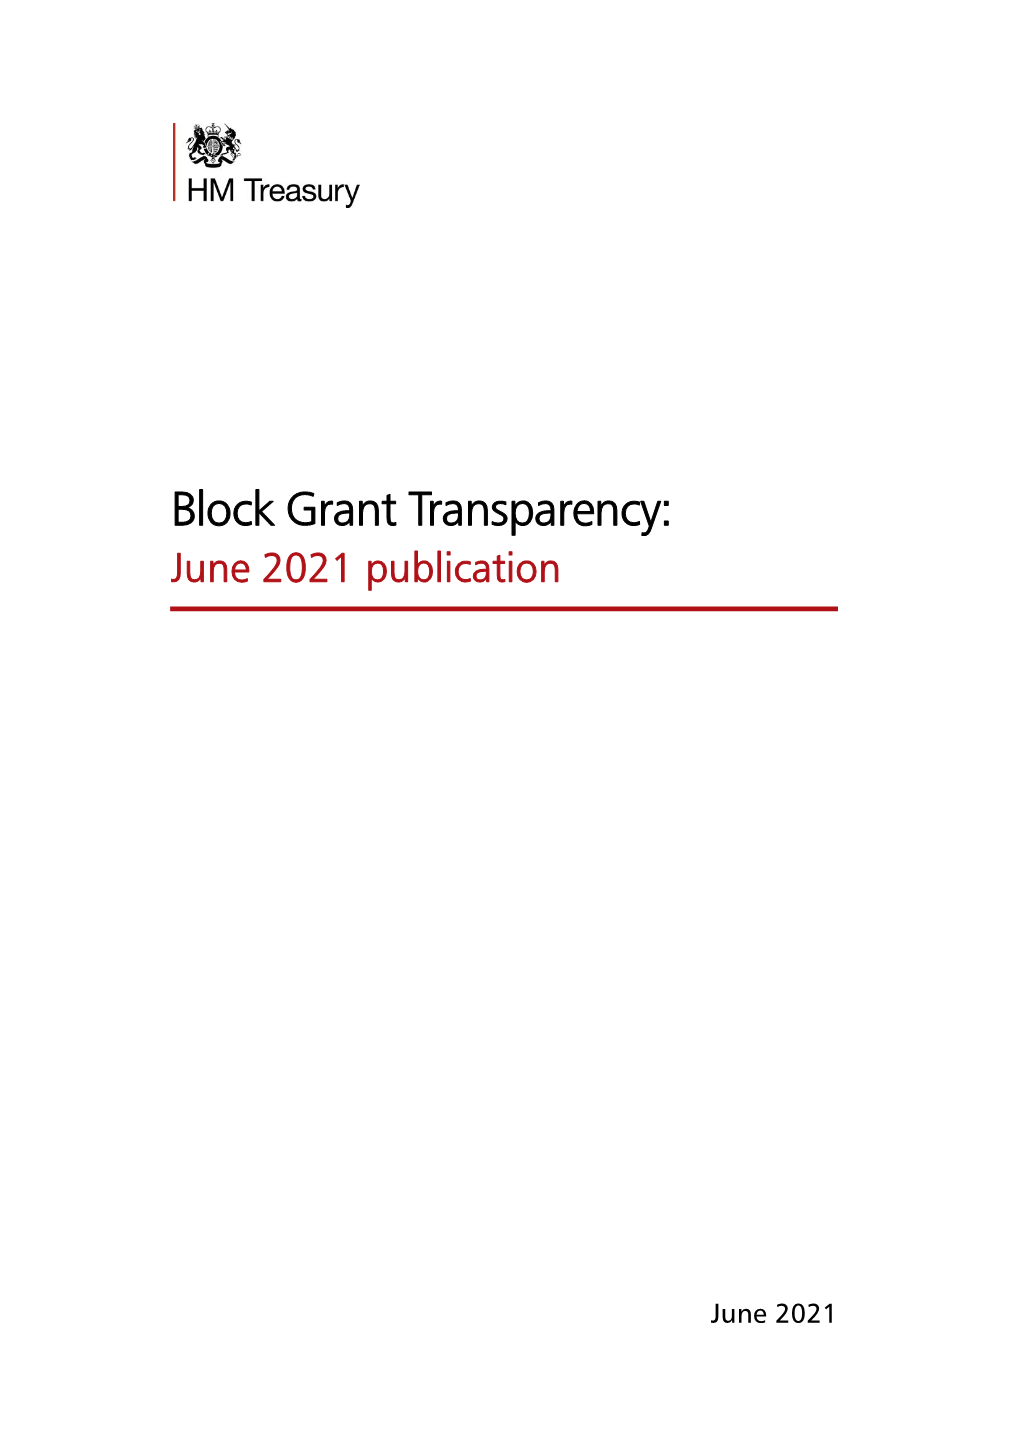 Block Grant Transparency: June 2021 Publication